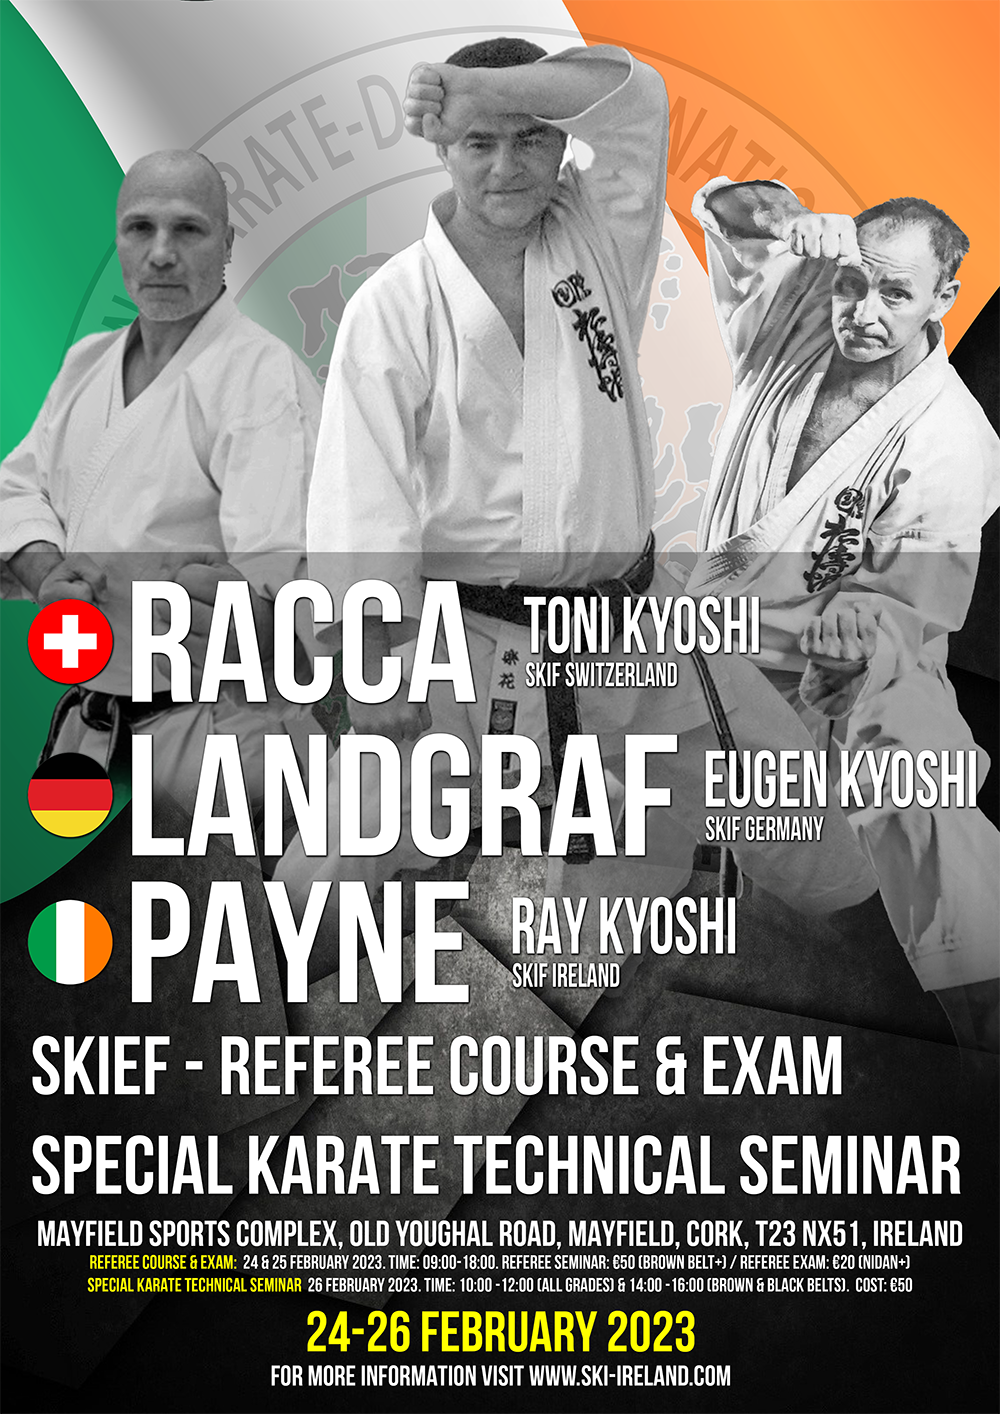 SKIF Ireland - SKIEF Referee and Karate Seminar with Kyoshi Toni Racca & Kyoshi Eugen Landgraf & Kyoshi Ray Payne